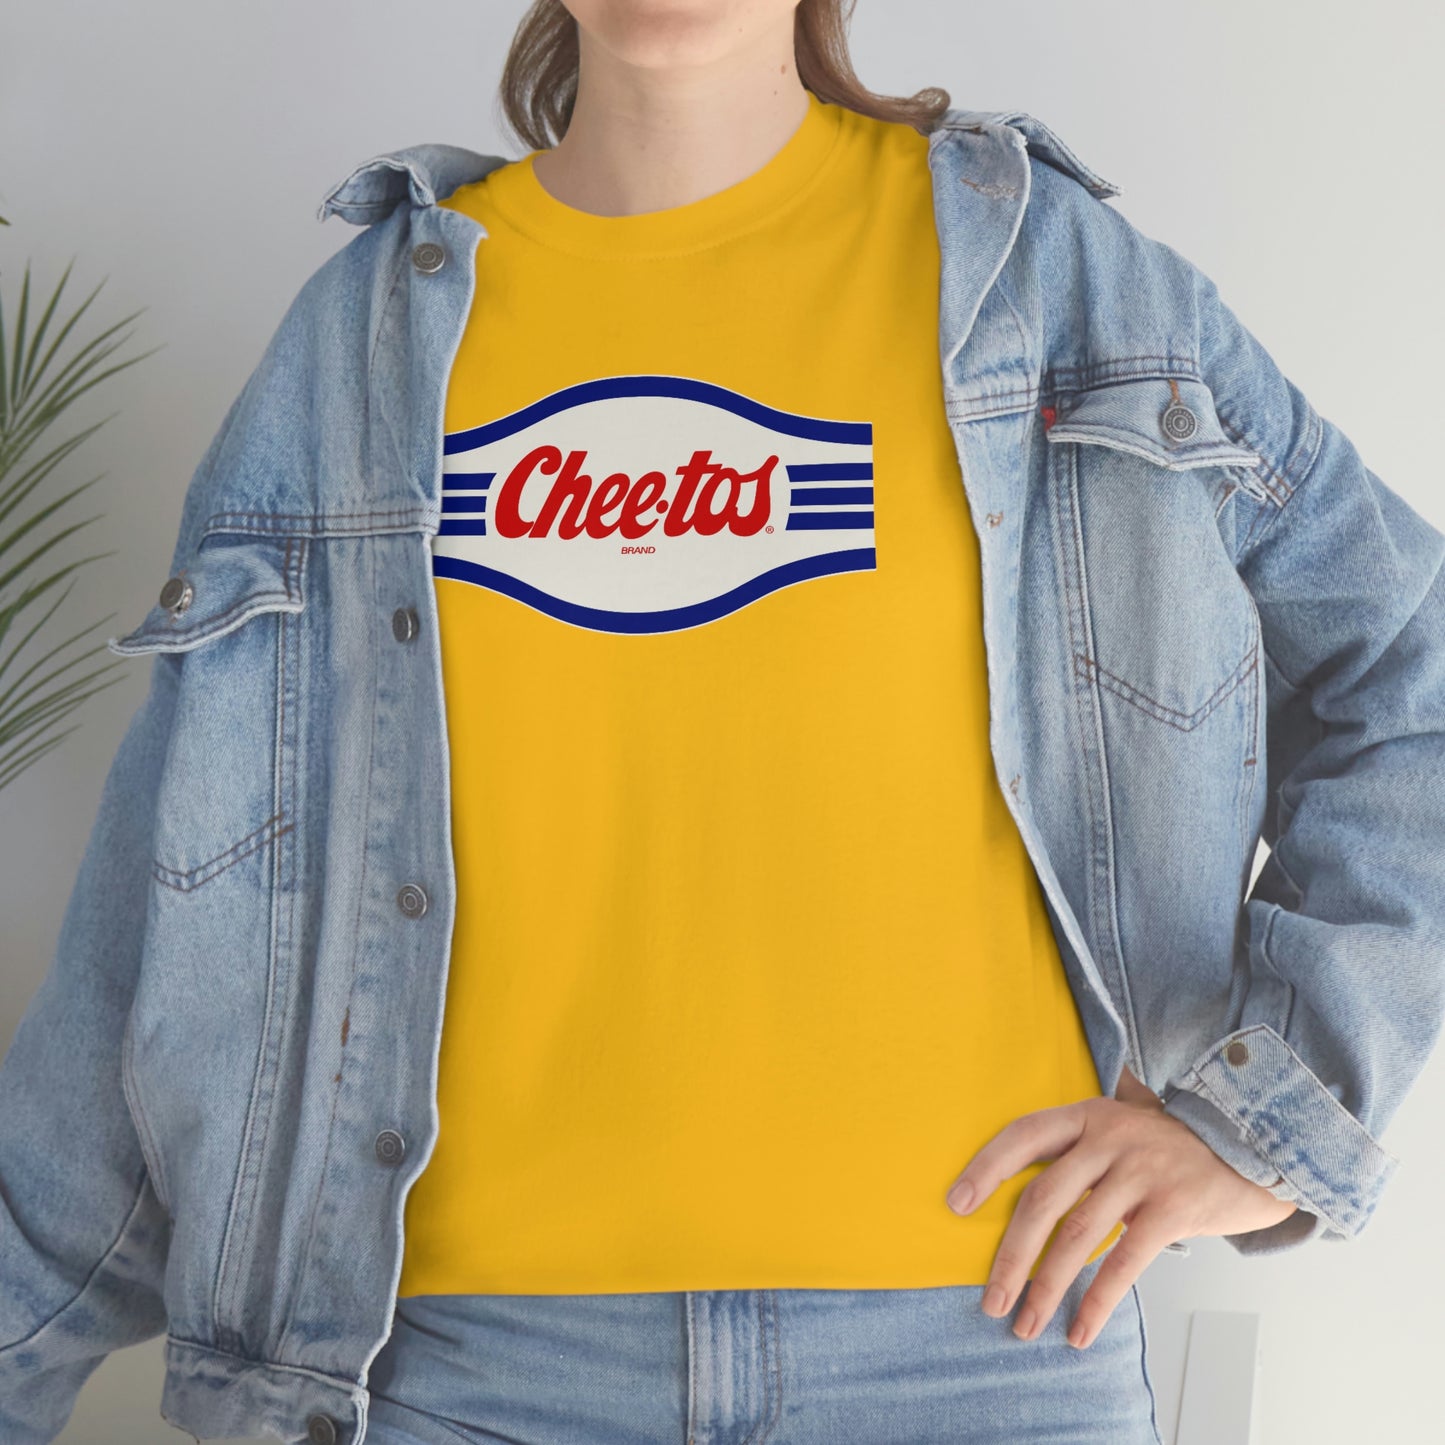 Cheetos T-Shirt